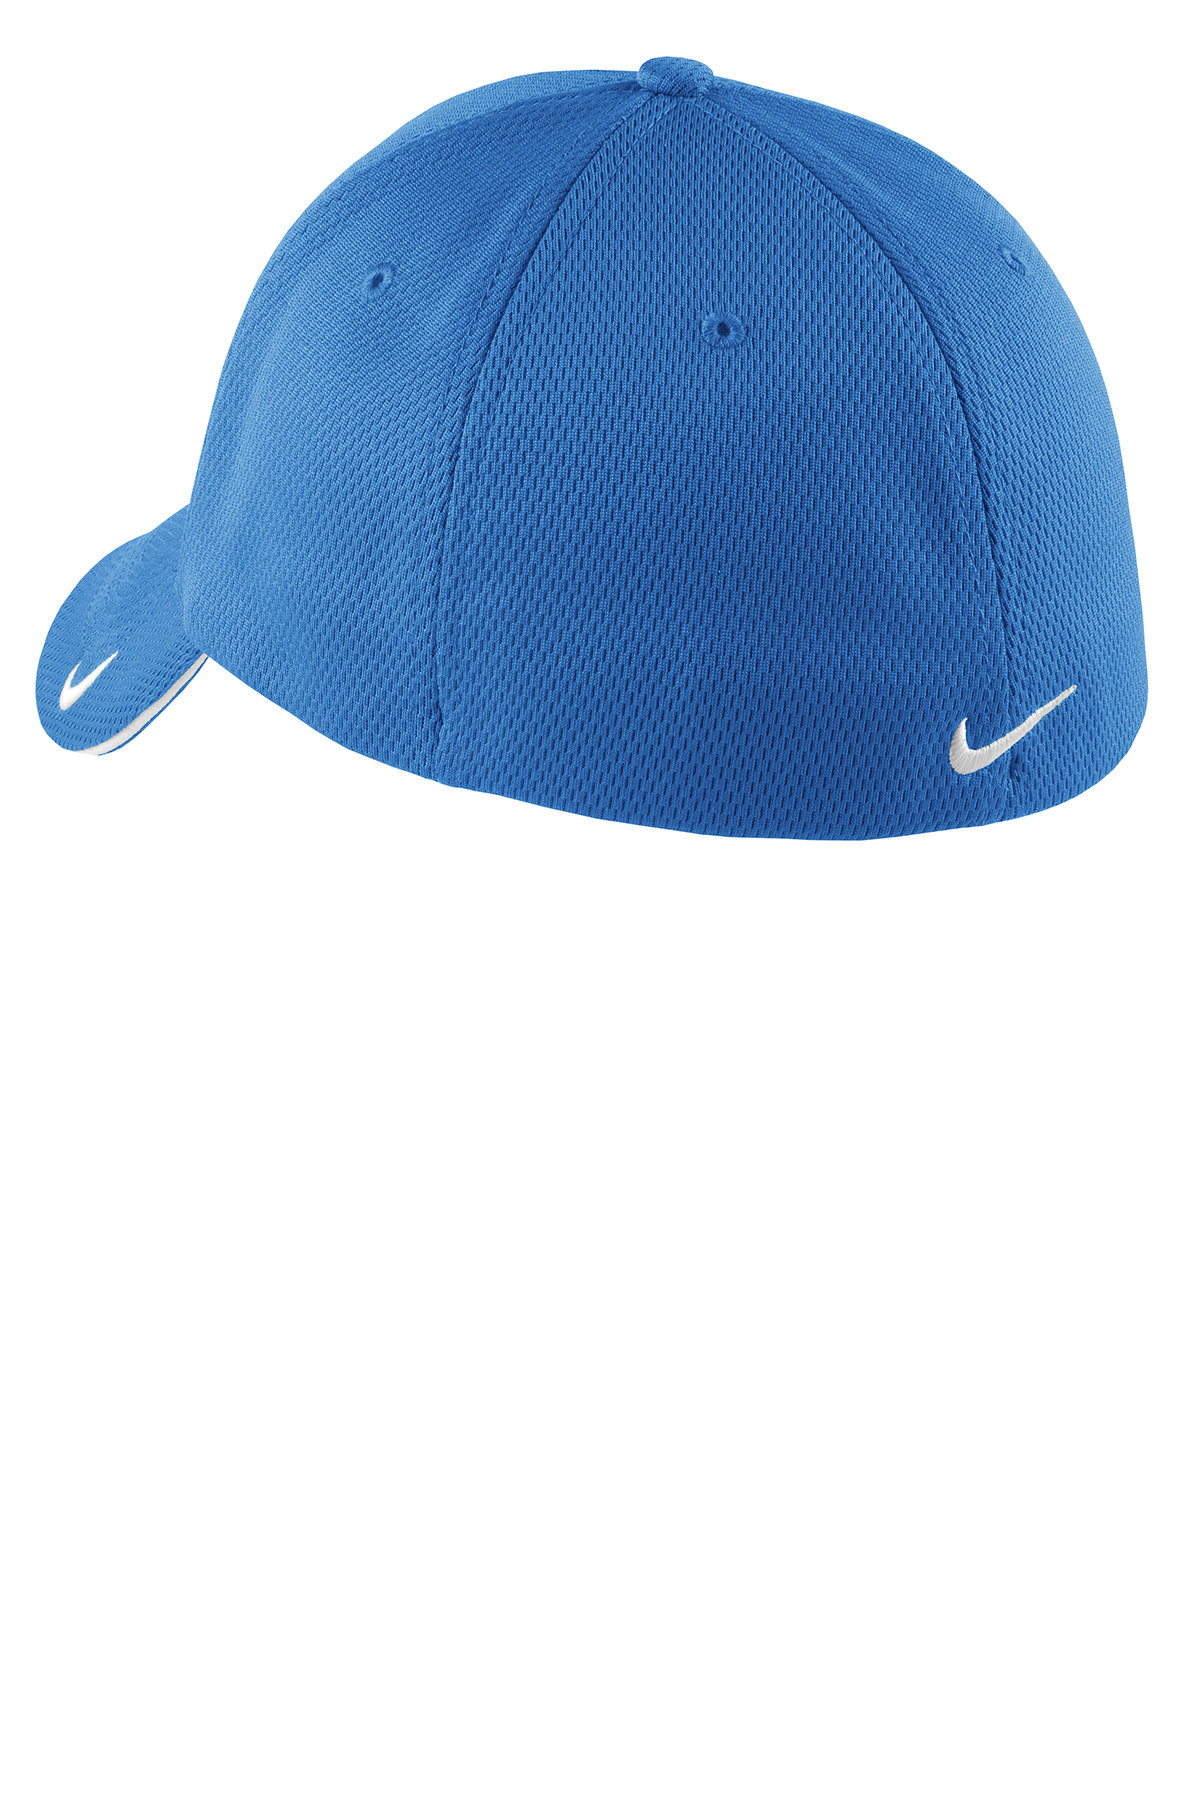 Nike Dri-FIT Mesh Swoosh Flex Sandwich Cap, Product